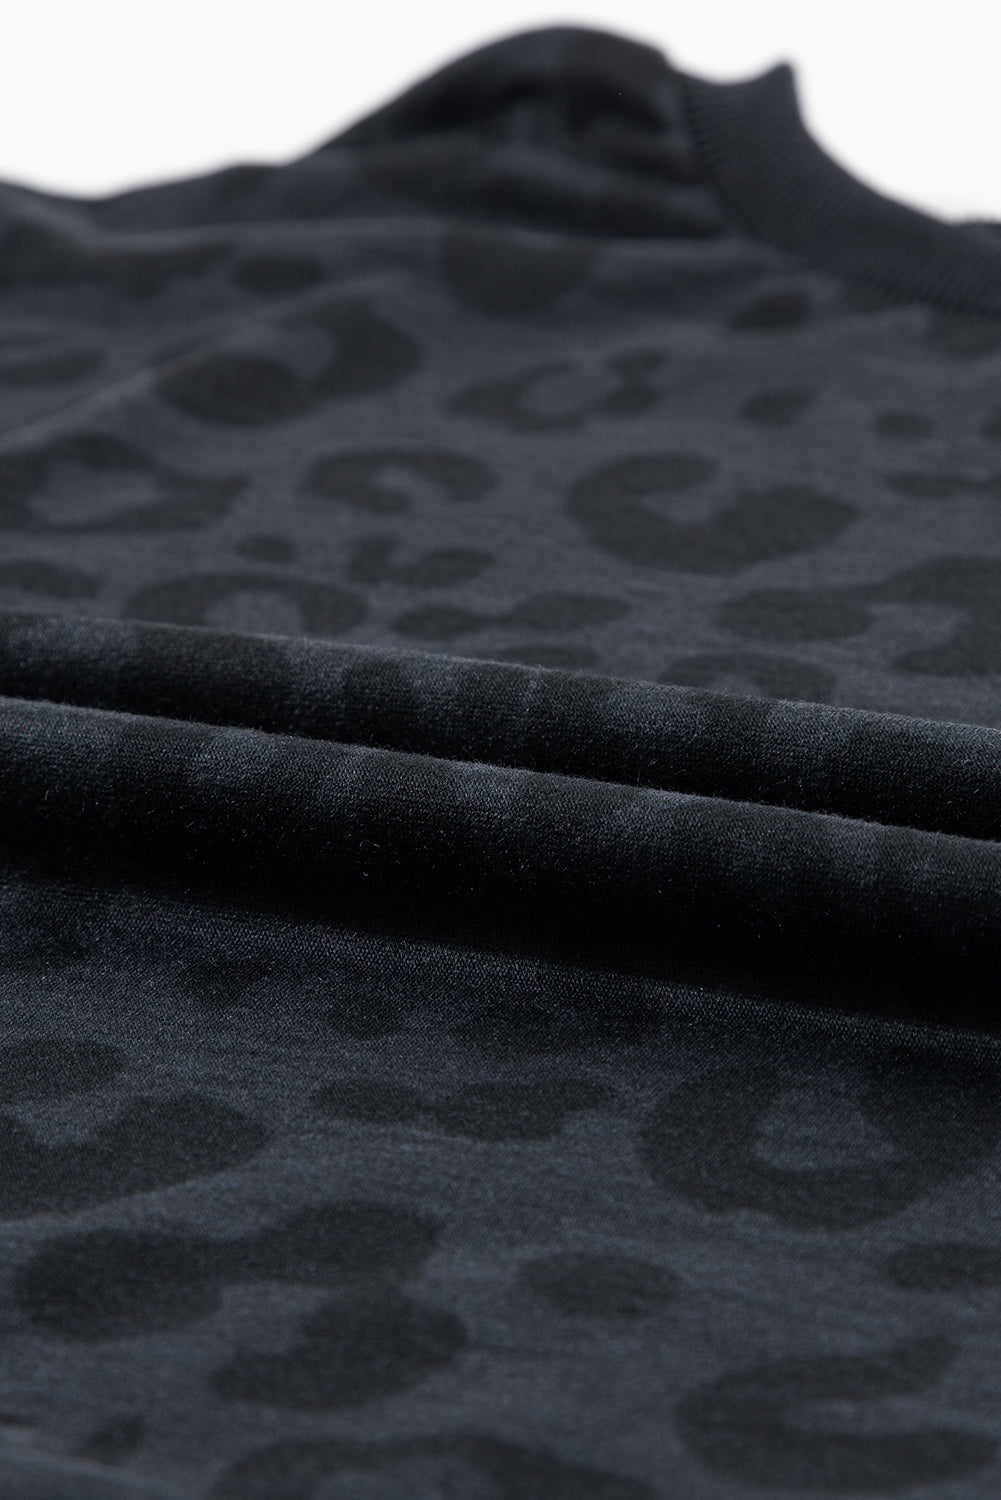 Set di due pezzi di pantaloncini con cravatta in raso a maniche lunghe stampati leopardati grigi